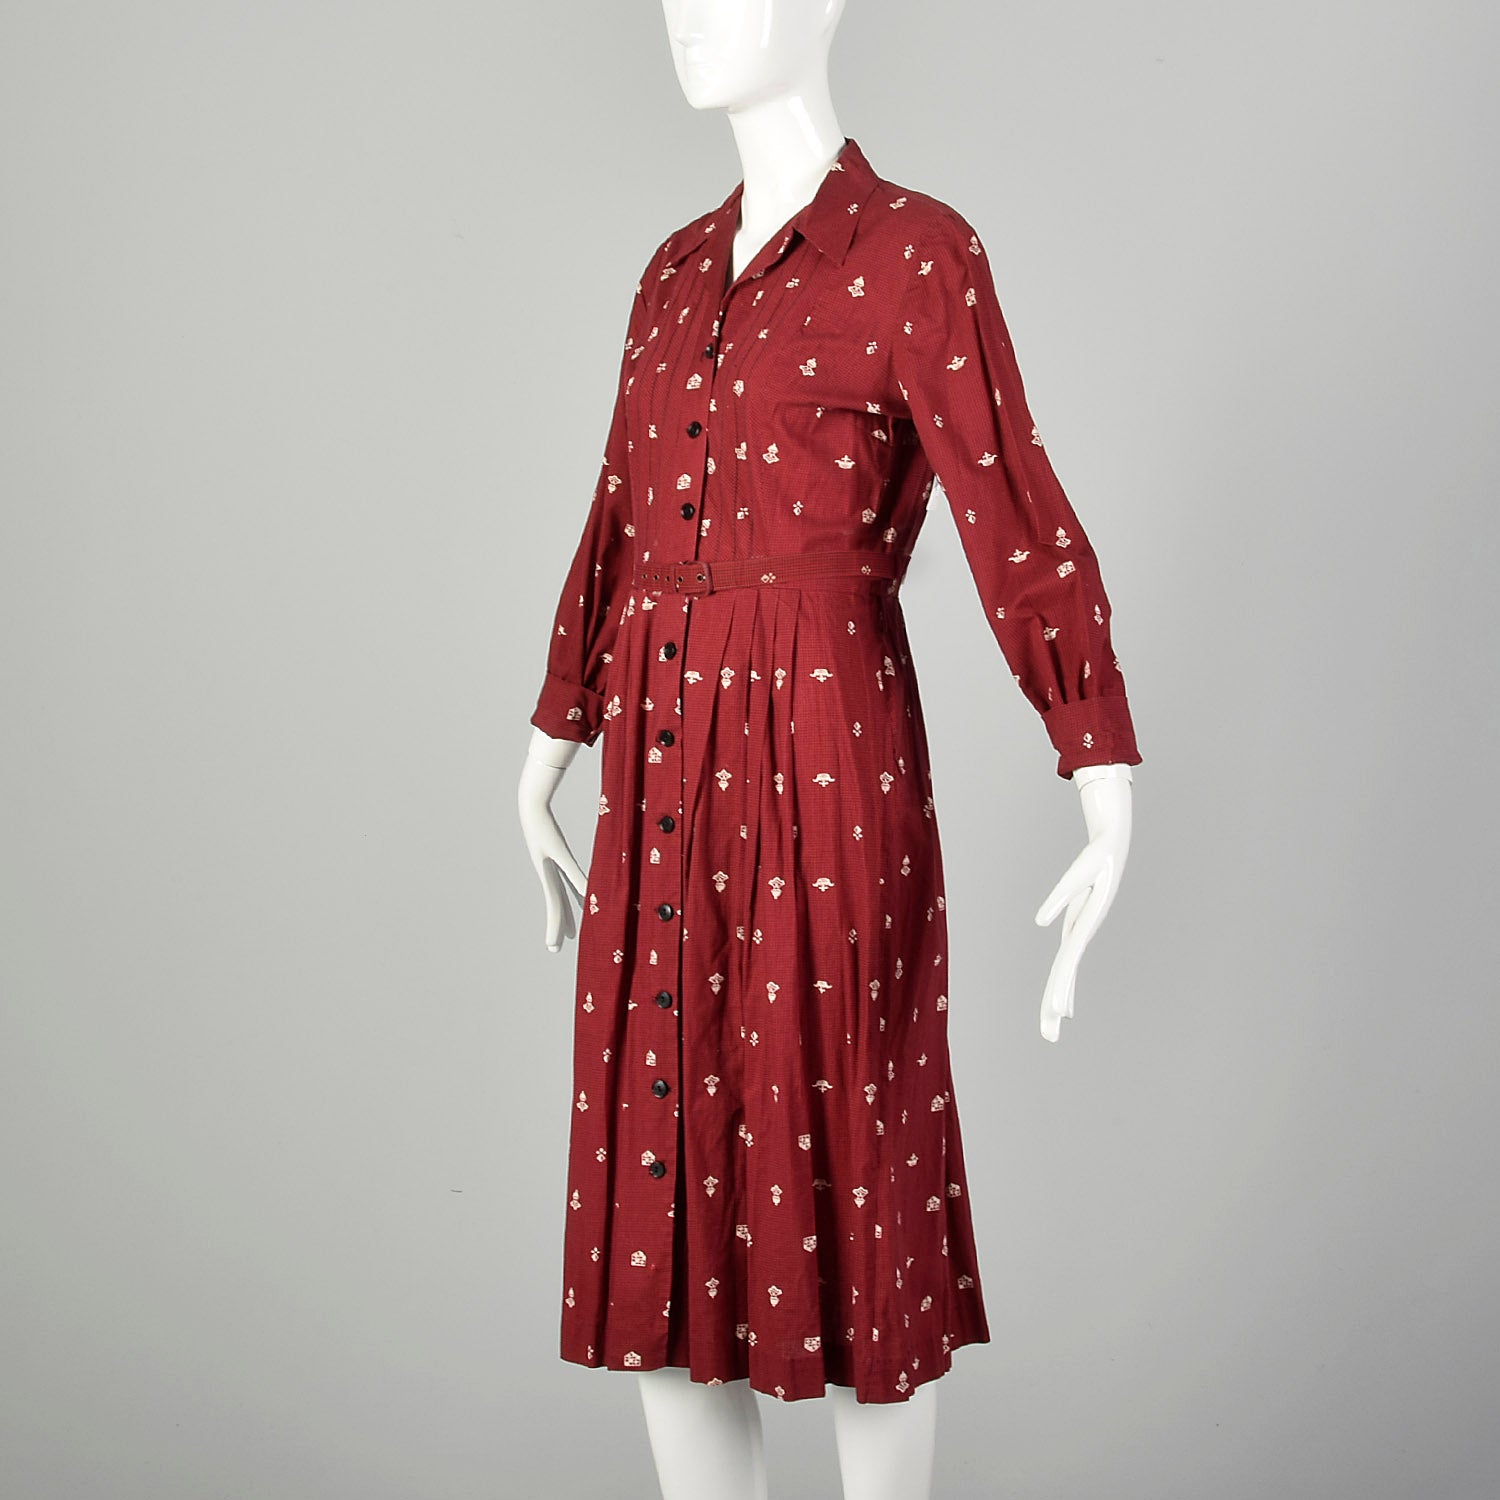 Medium 1950s Day Dress Cotton Novelty Print Casual Long Sleeve